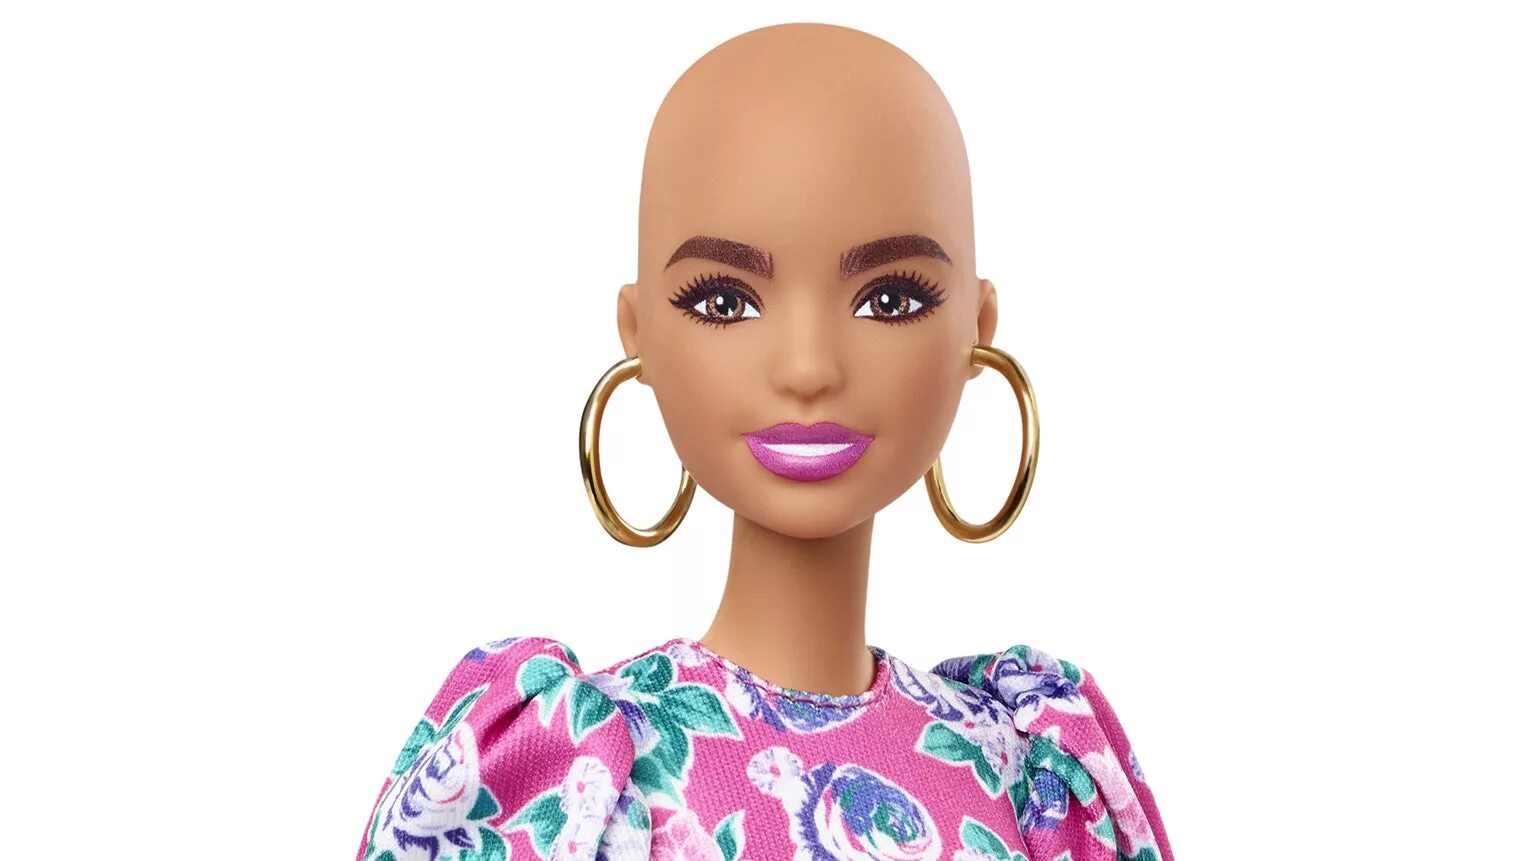 Doll 2020. Барби фашионистас лысая. Mattel Barbie витилиго. Кукла Барби с витилиго. Барби фэшионистка лысая.